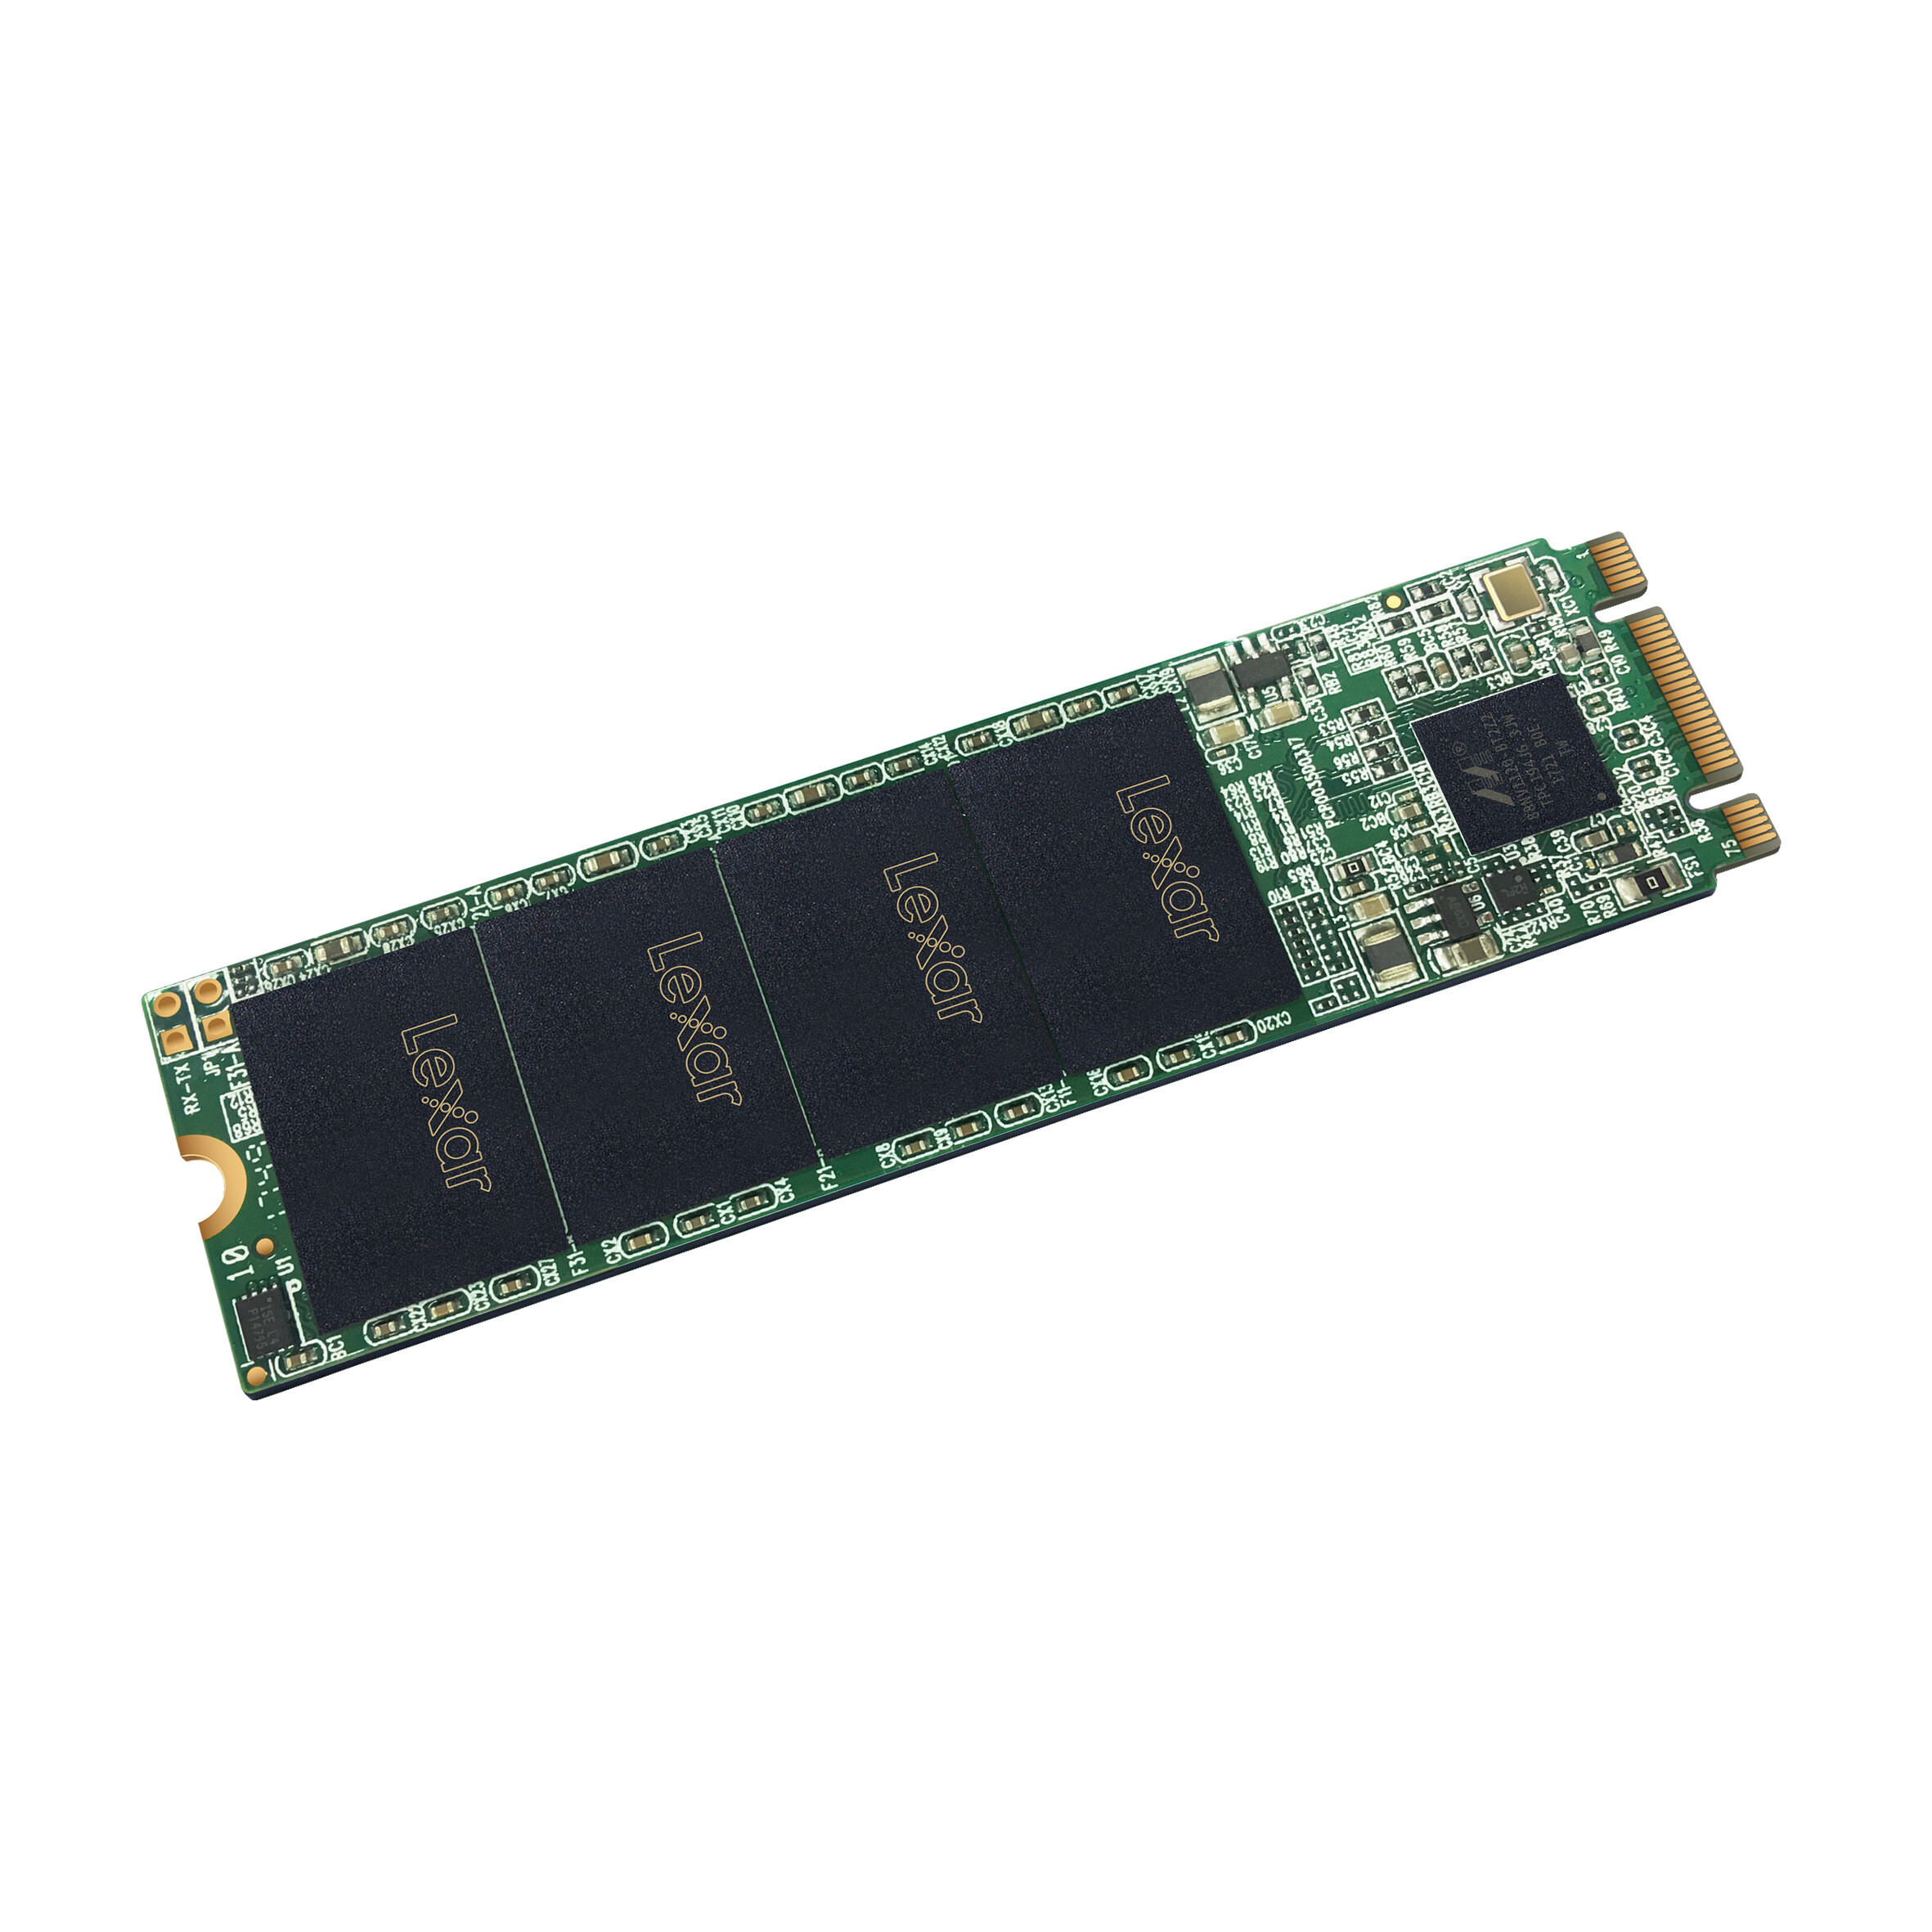 Ổ cứng SSD Lexar NM100 M.2 2280 SATA 3 128GB